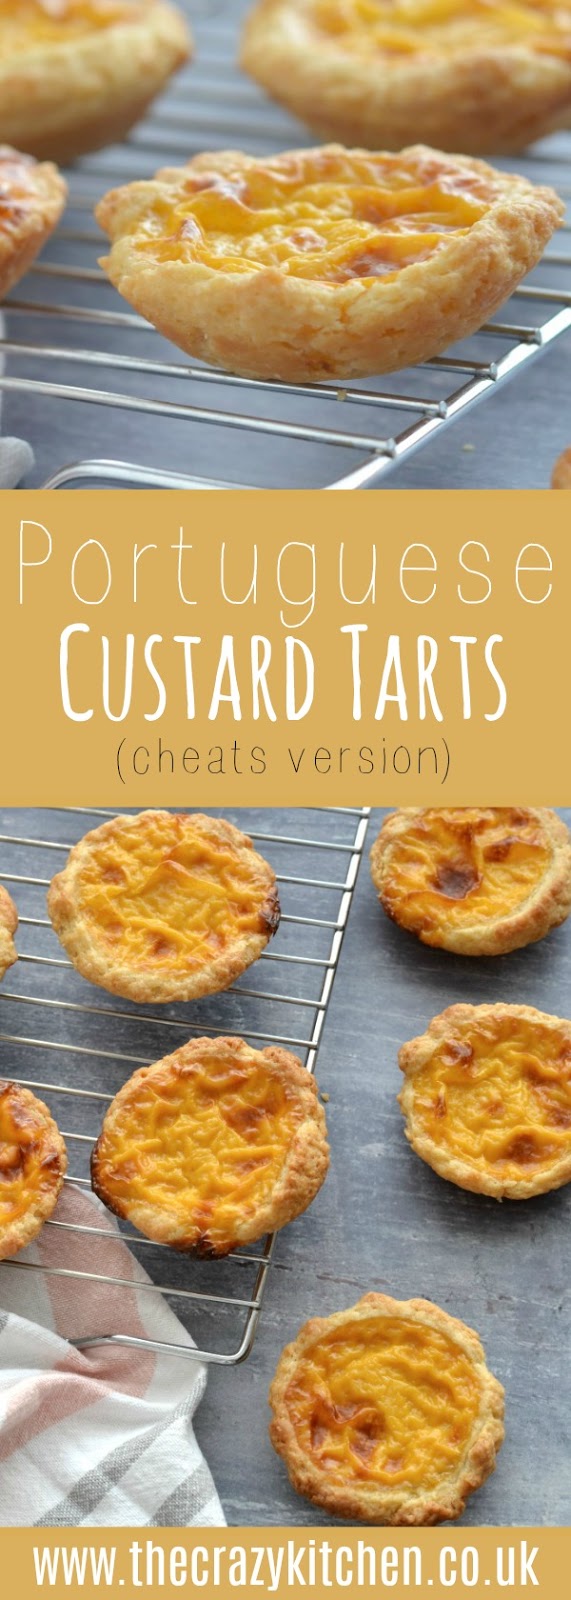 The Crazy Kitchen: Portuguese Custard Tarts (cheats version)